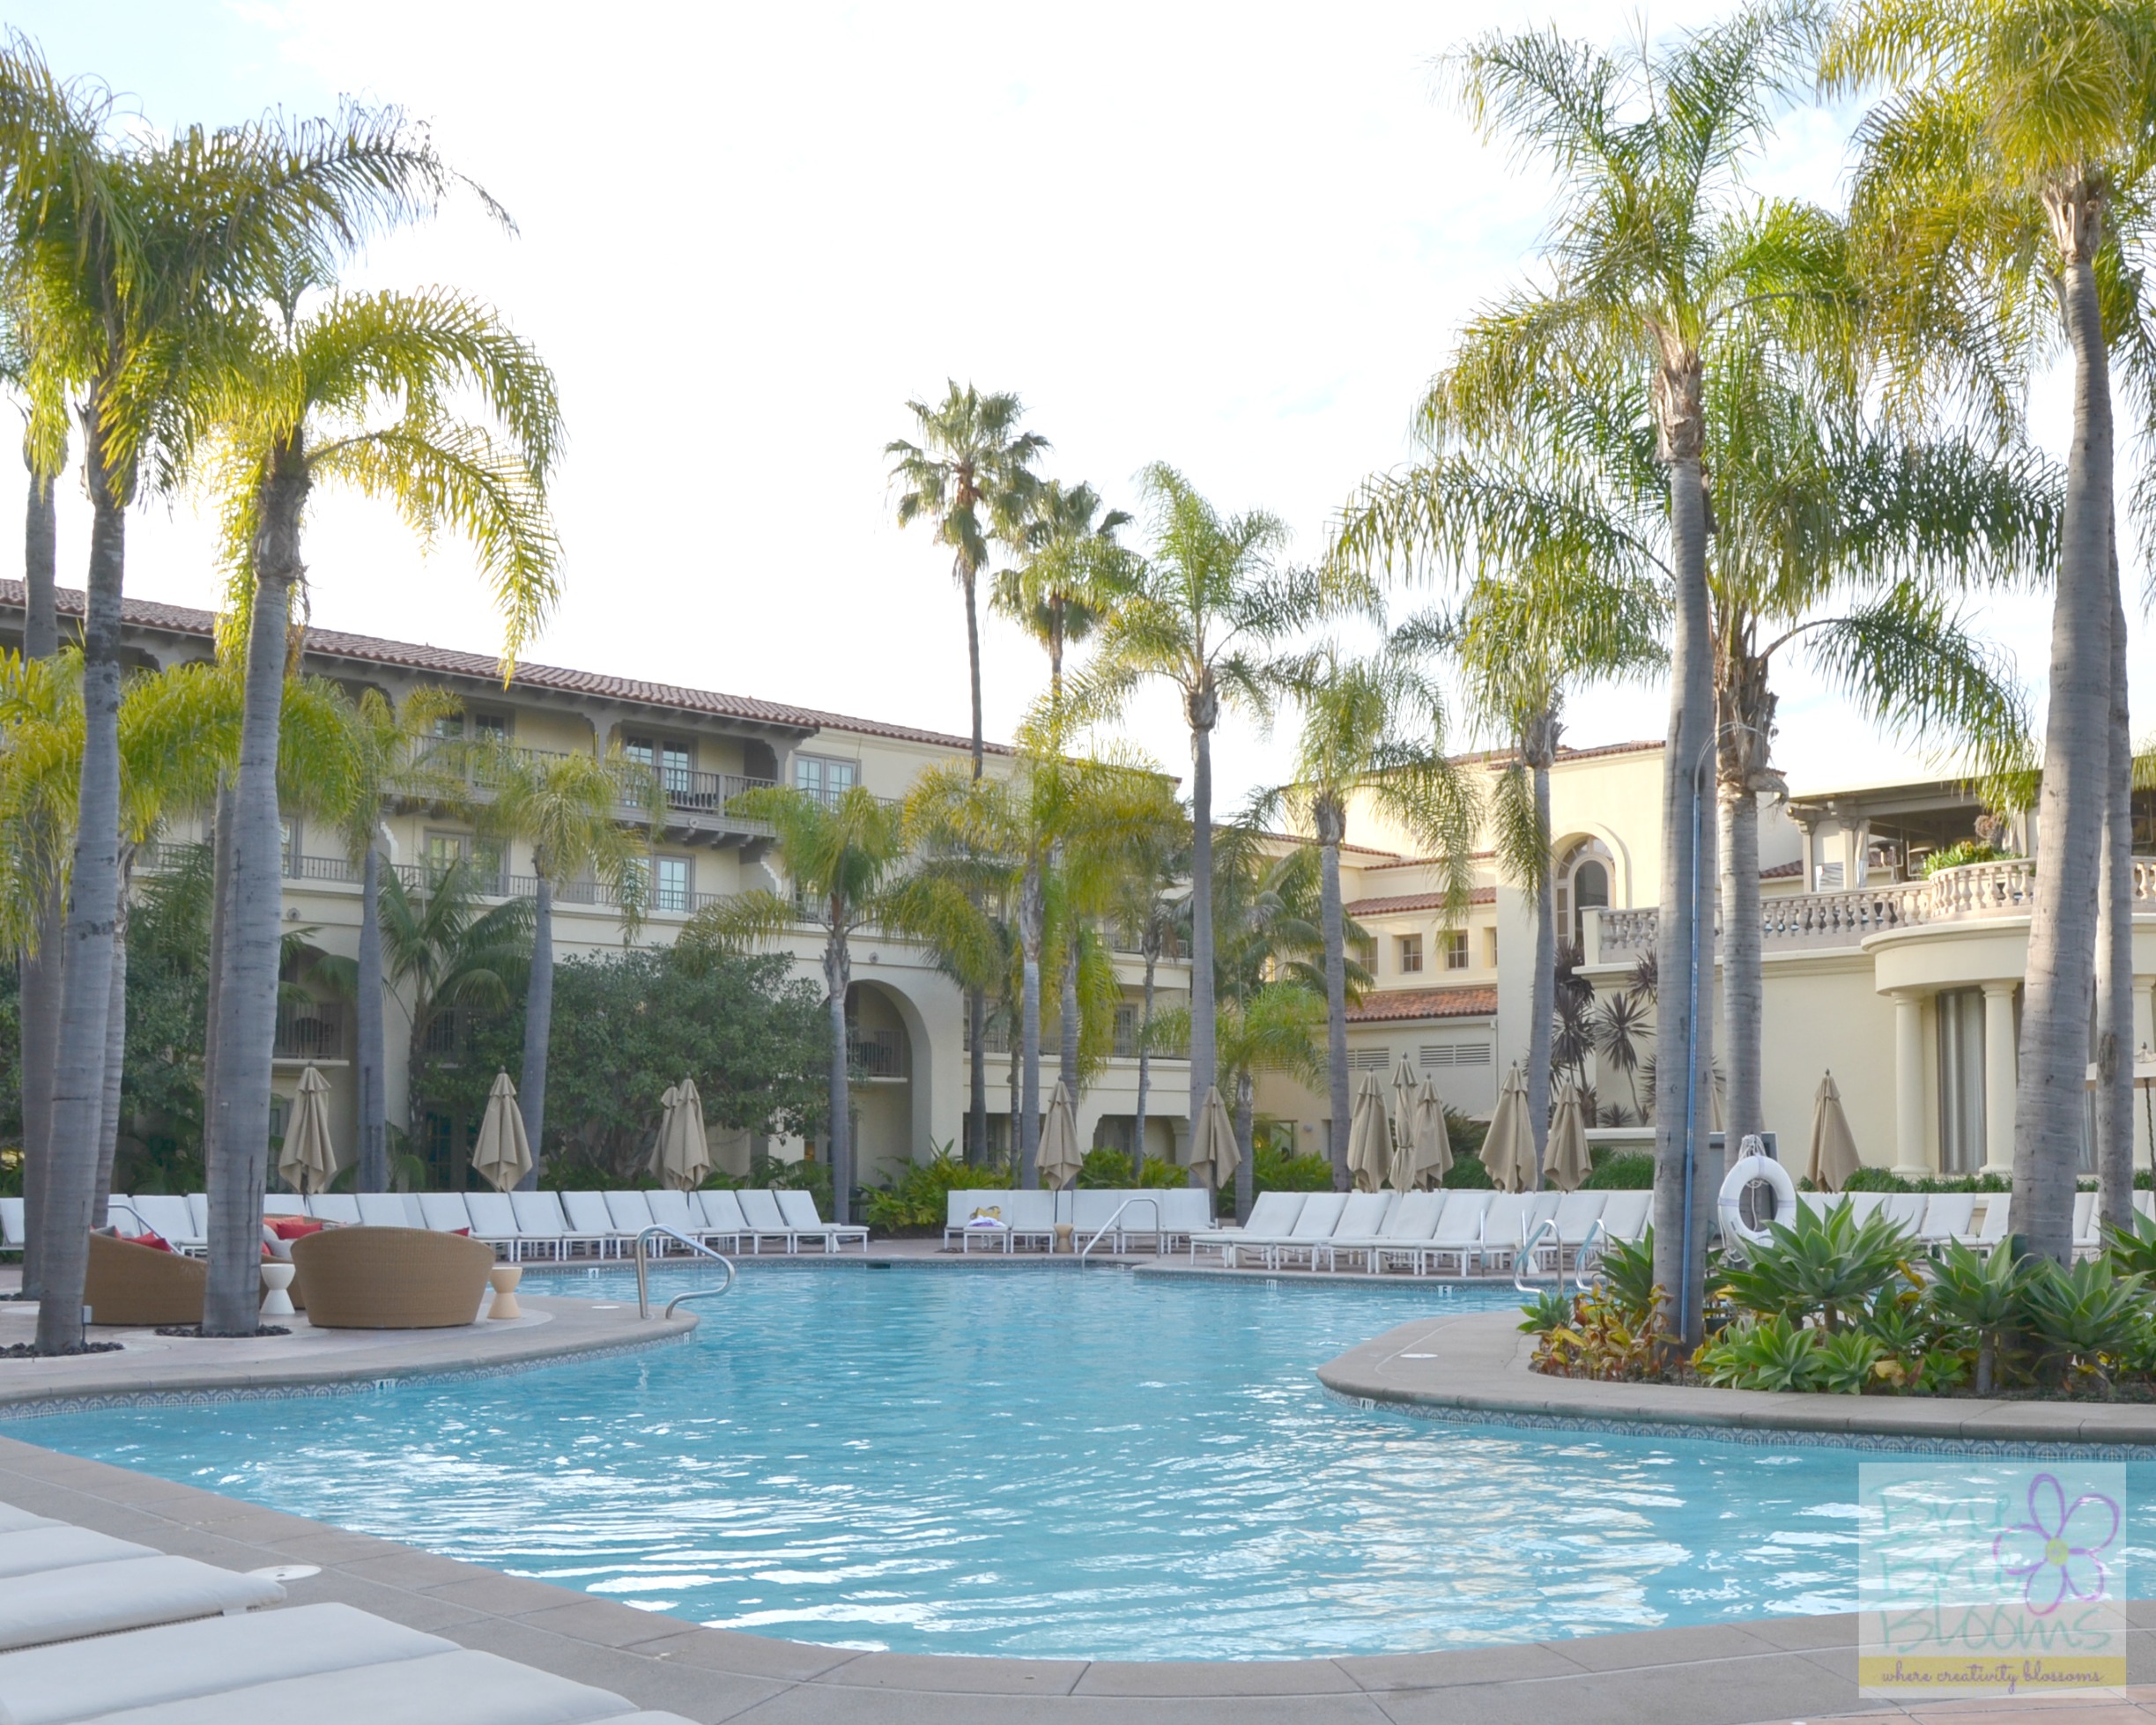 Ritz-Carlton Laguna Niguel pool